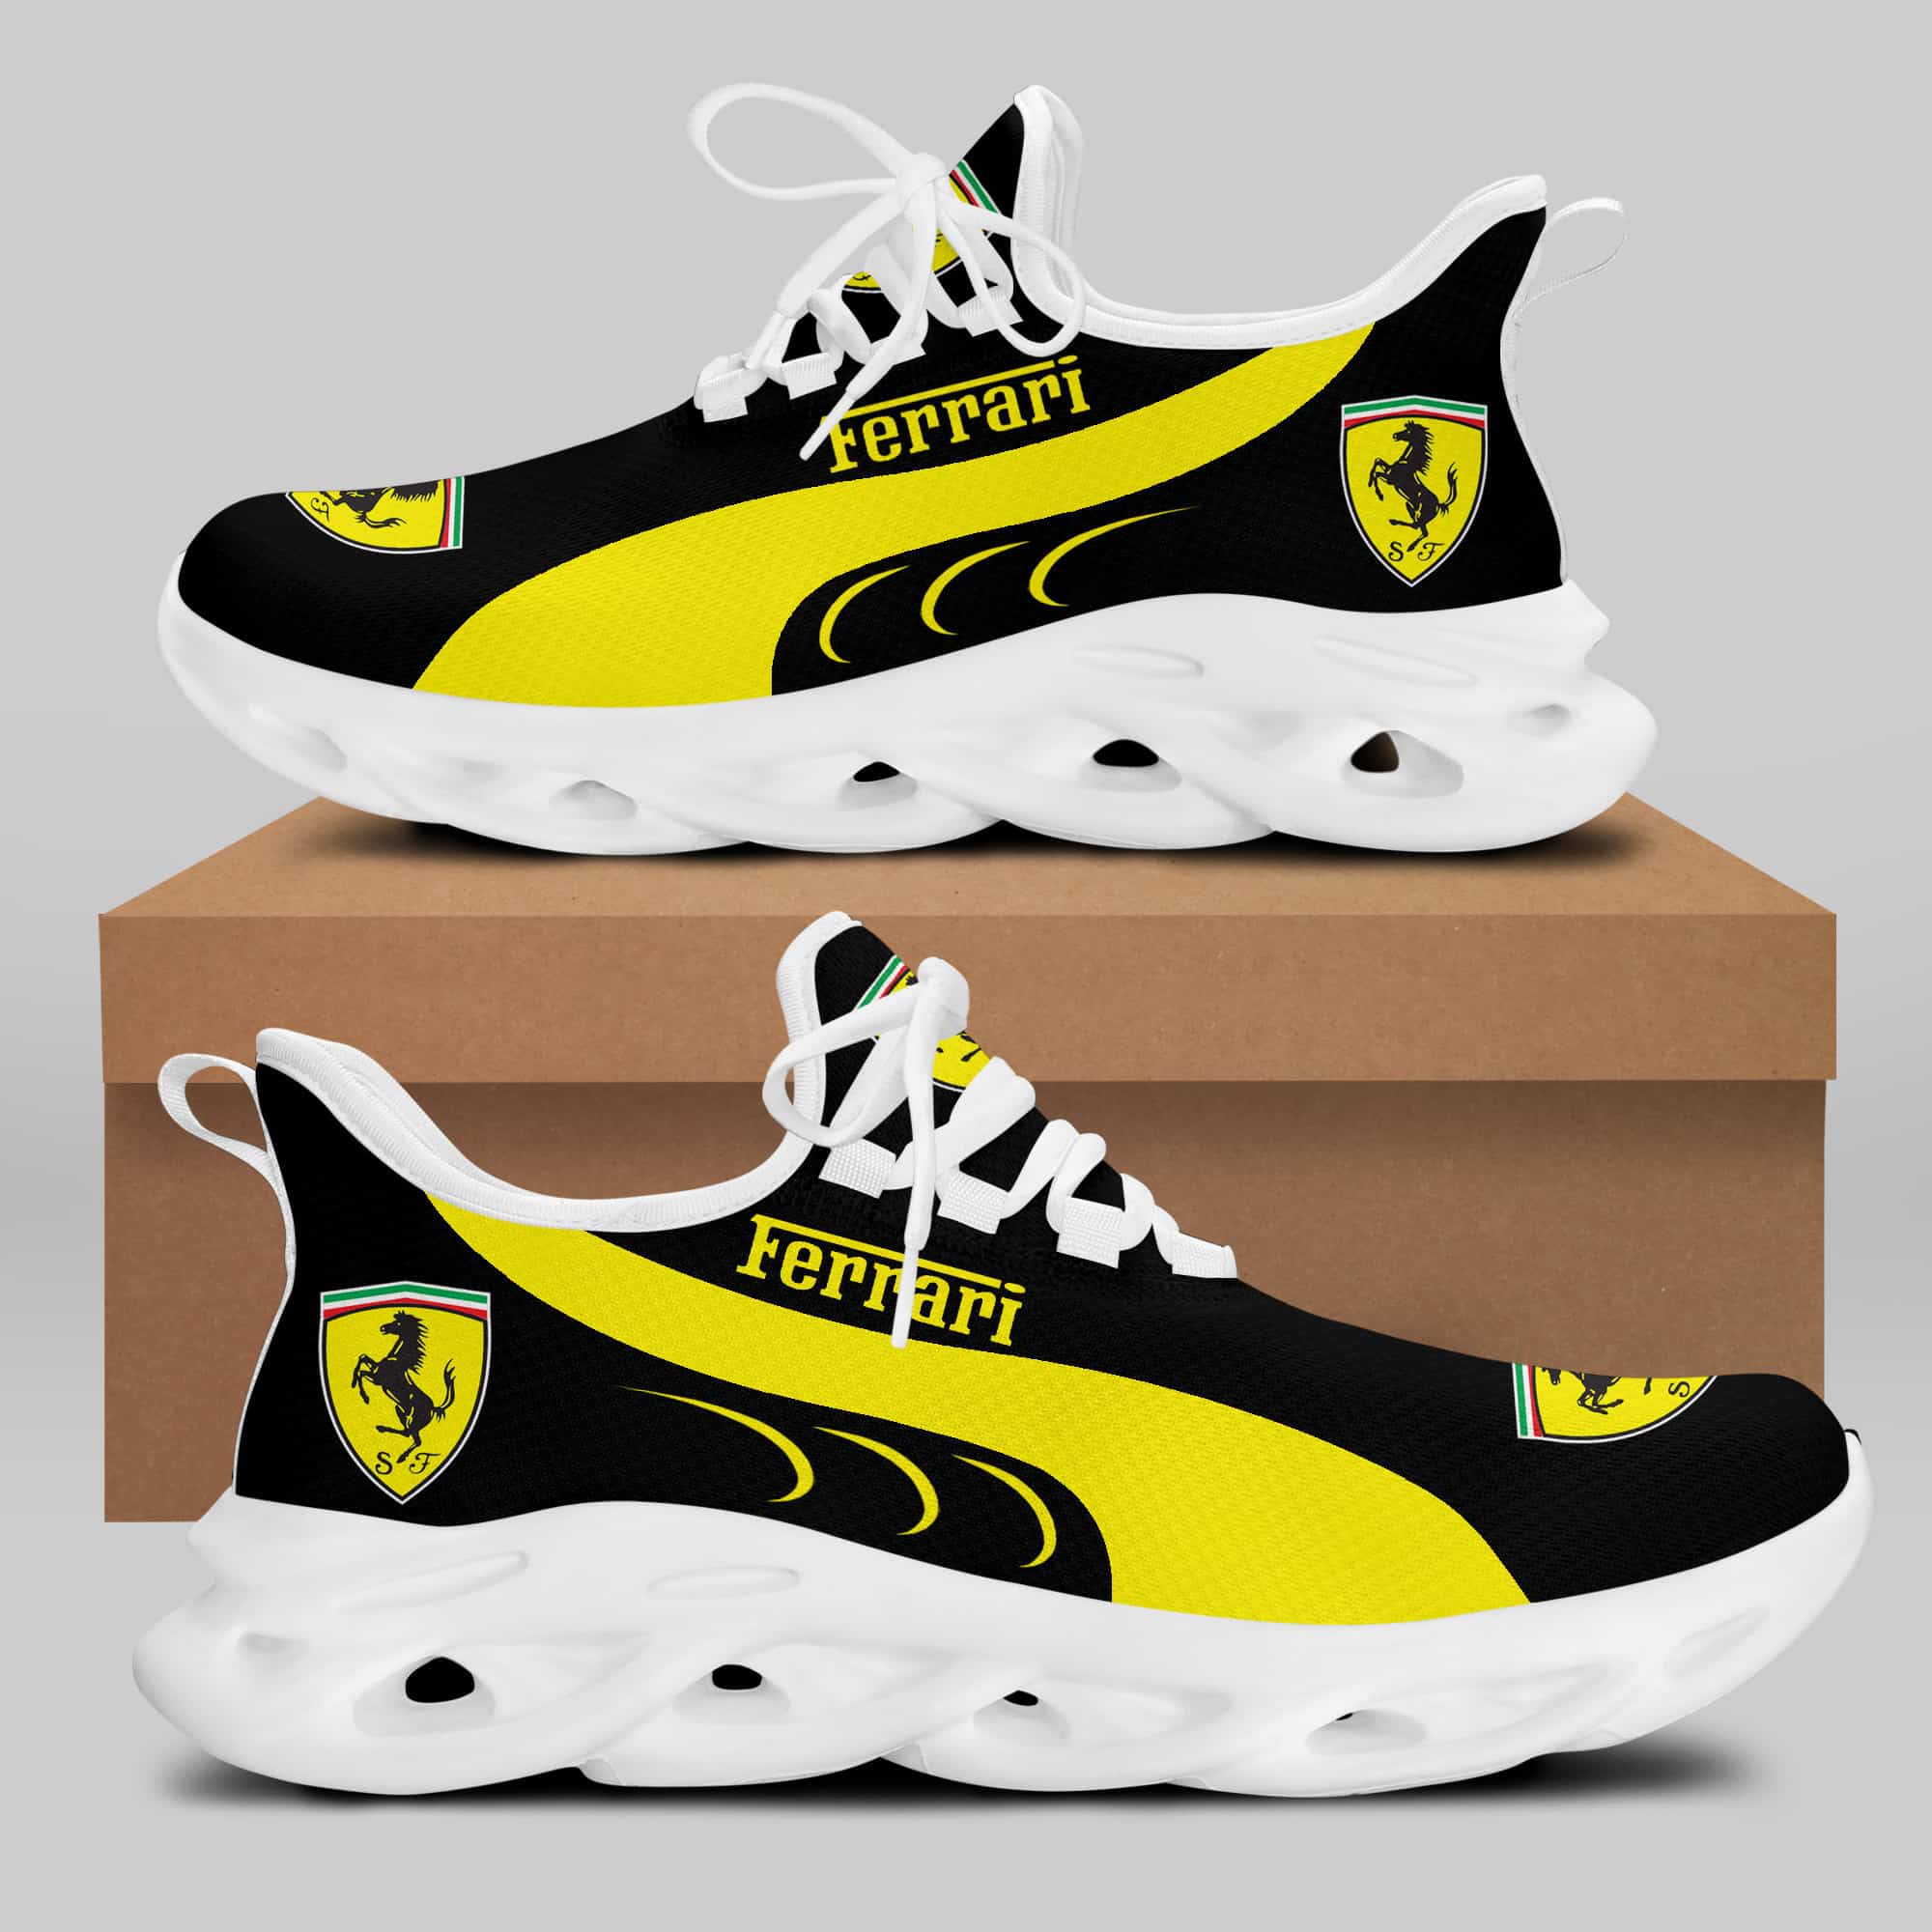 Ferrari Sneaker Running Shoes Max Soul Shoes Sneakers Ver 6 2